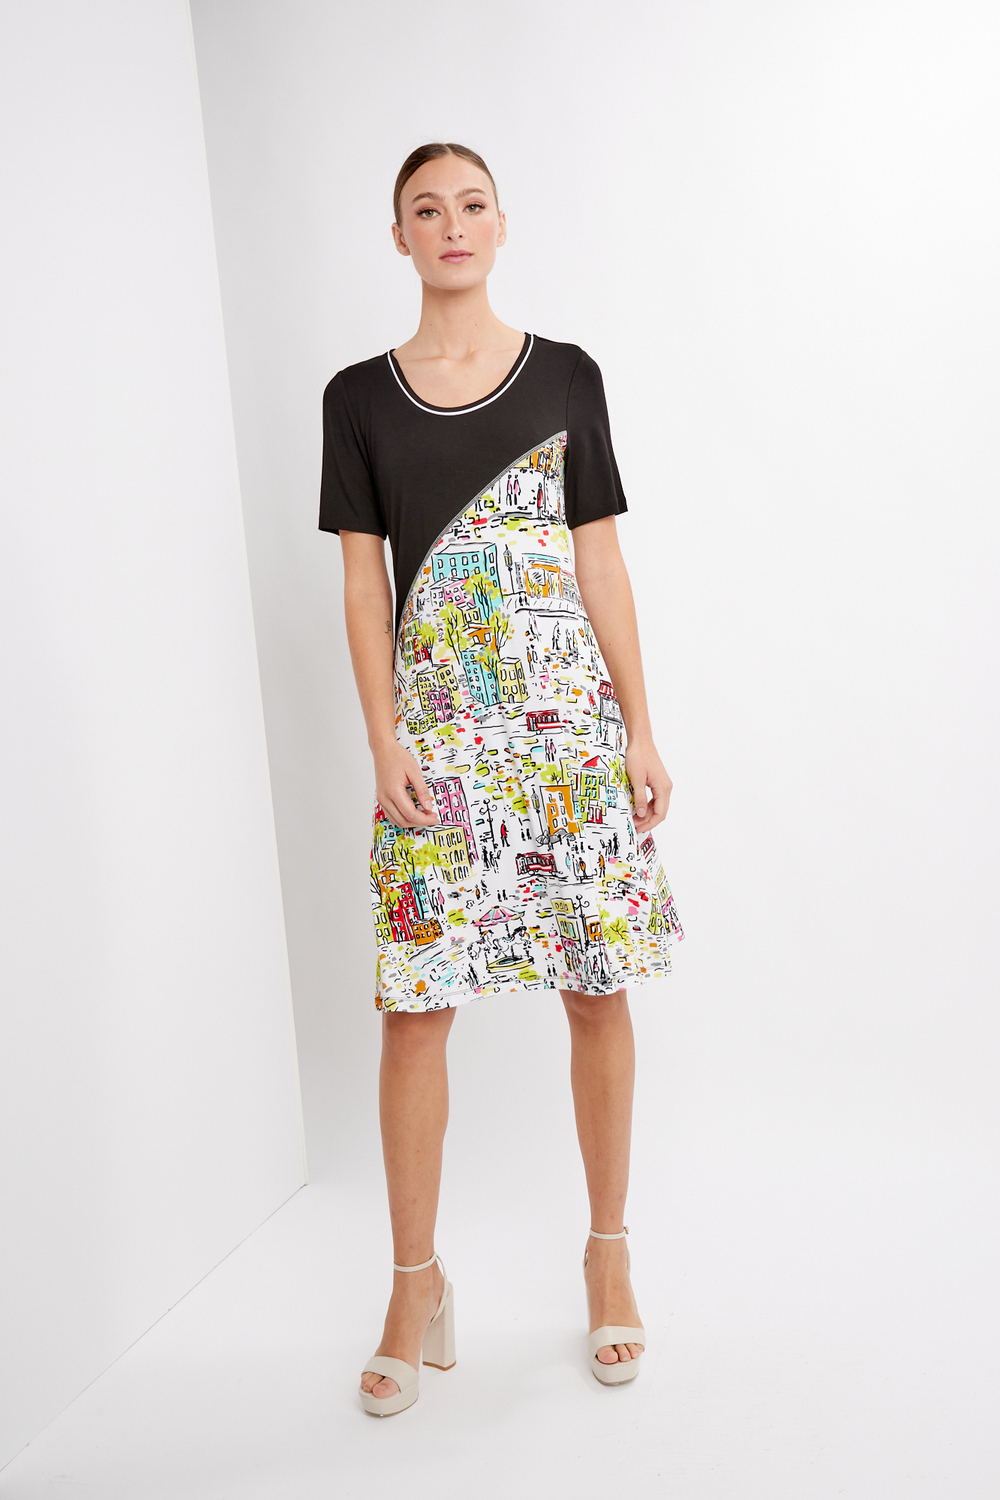 Summer Pleated Mini-Dress Style 24126. As Sample